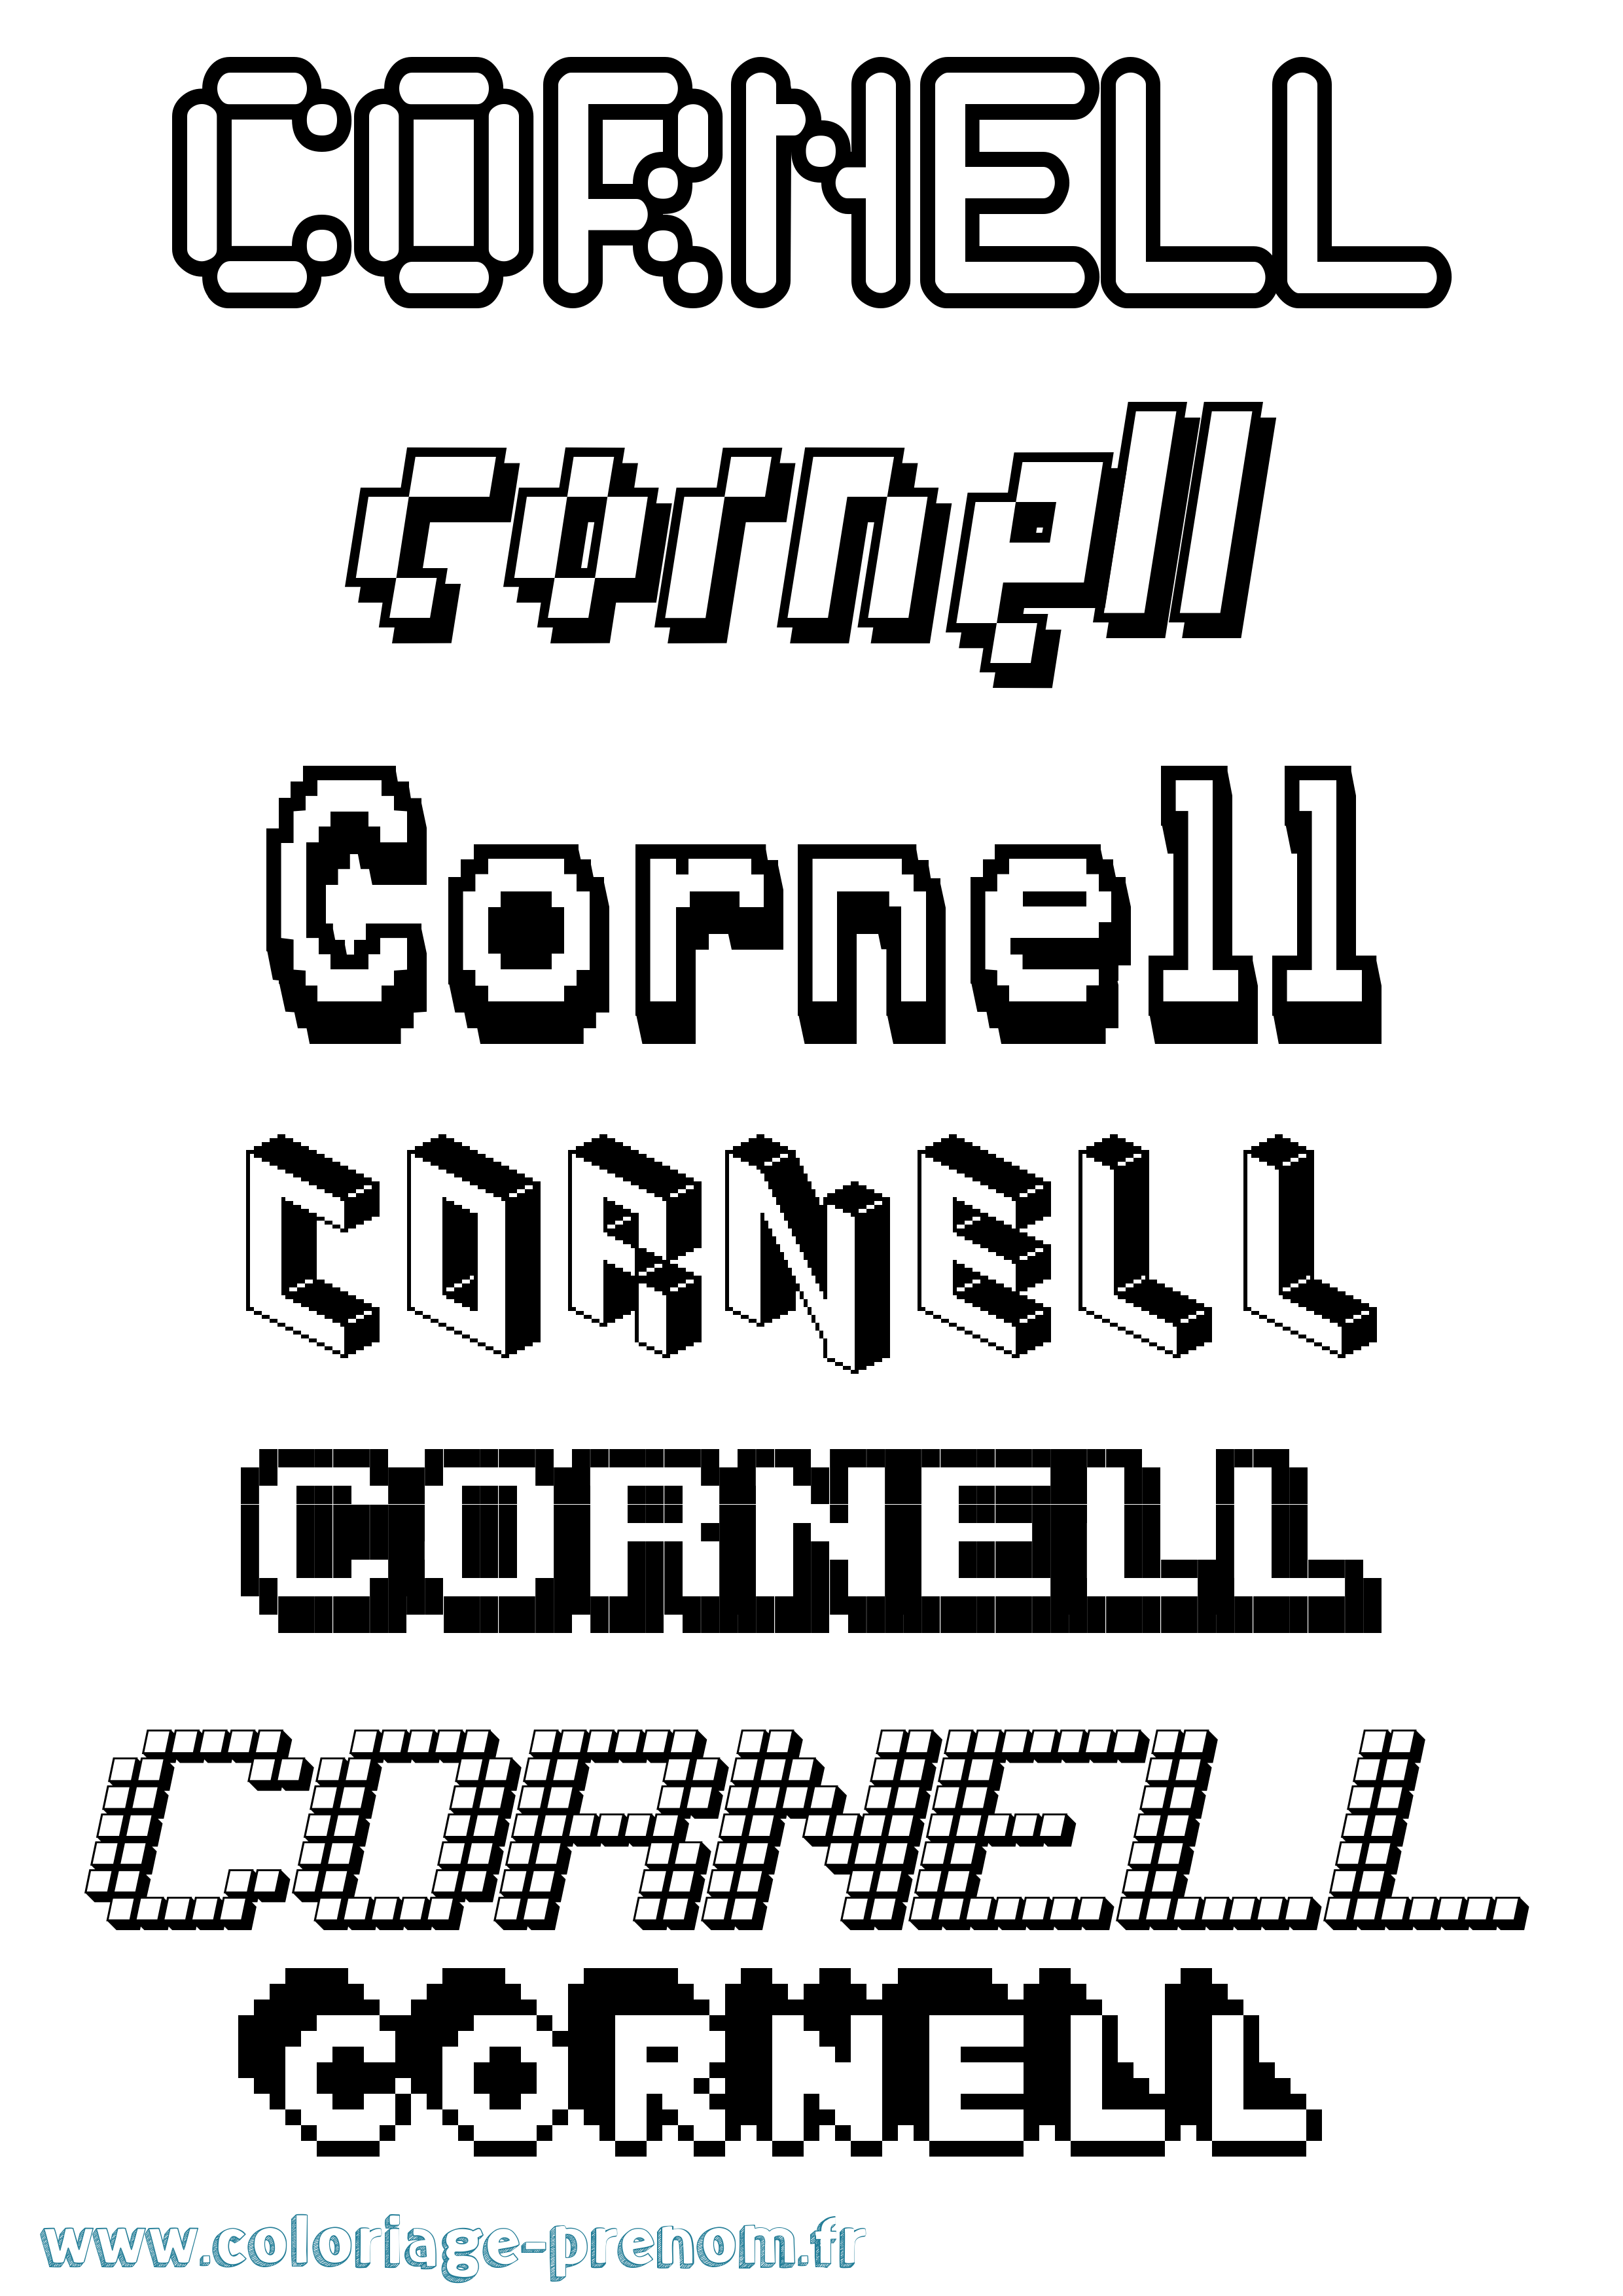 Coloriage prénom Cornell Pixel